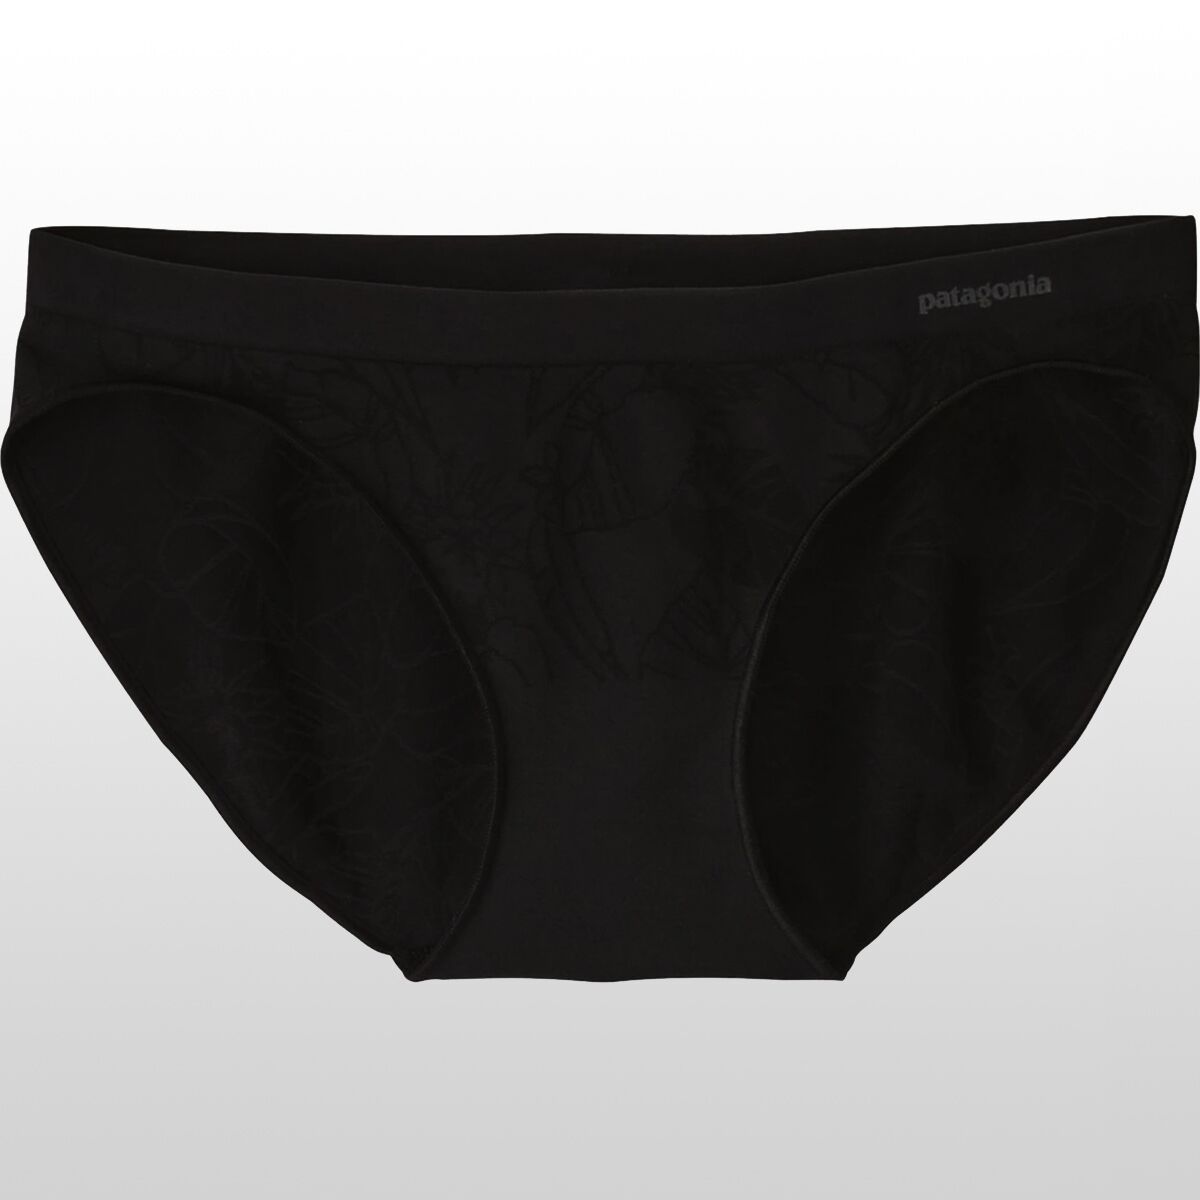 Patagonia Barely Bikini Underwear - Women's - Women